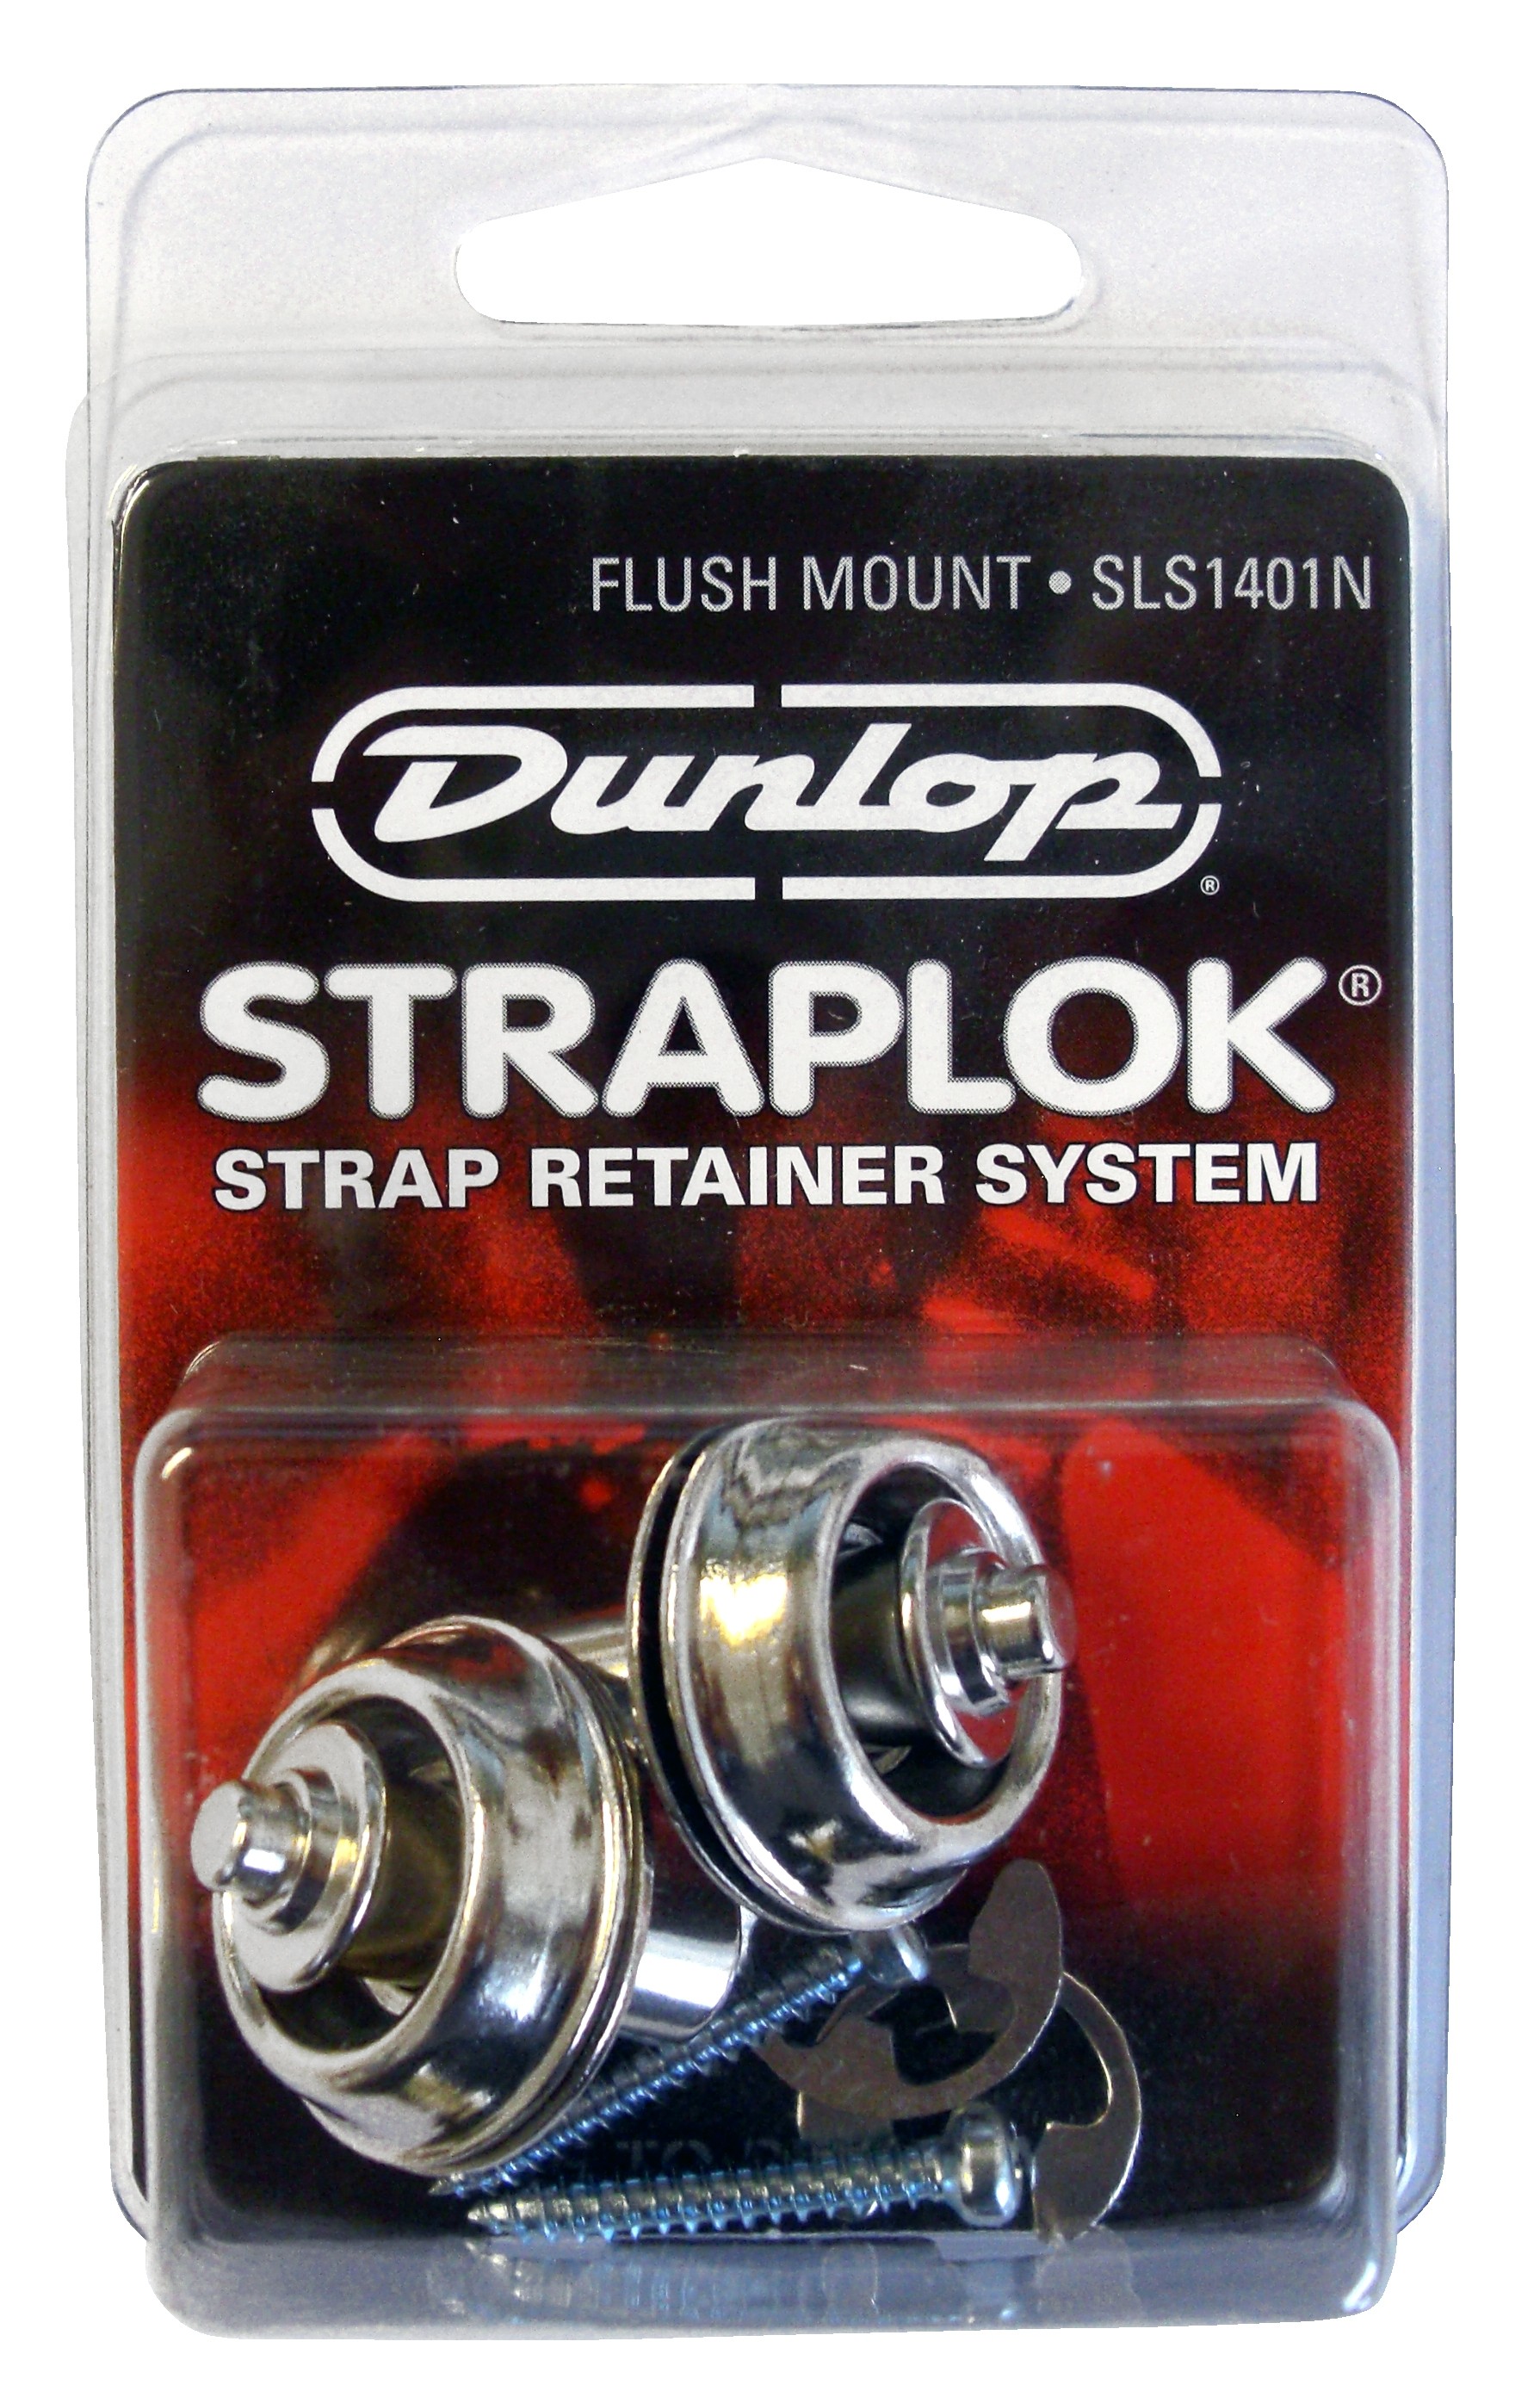 Dunlop Straplok SLS1401N Nickel Flush Mount